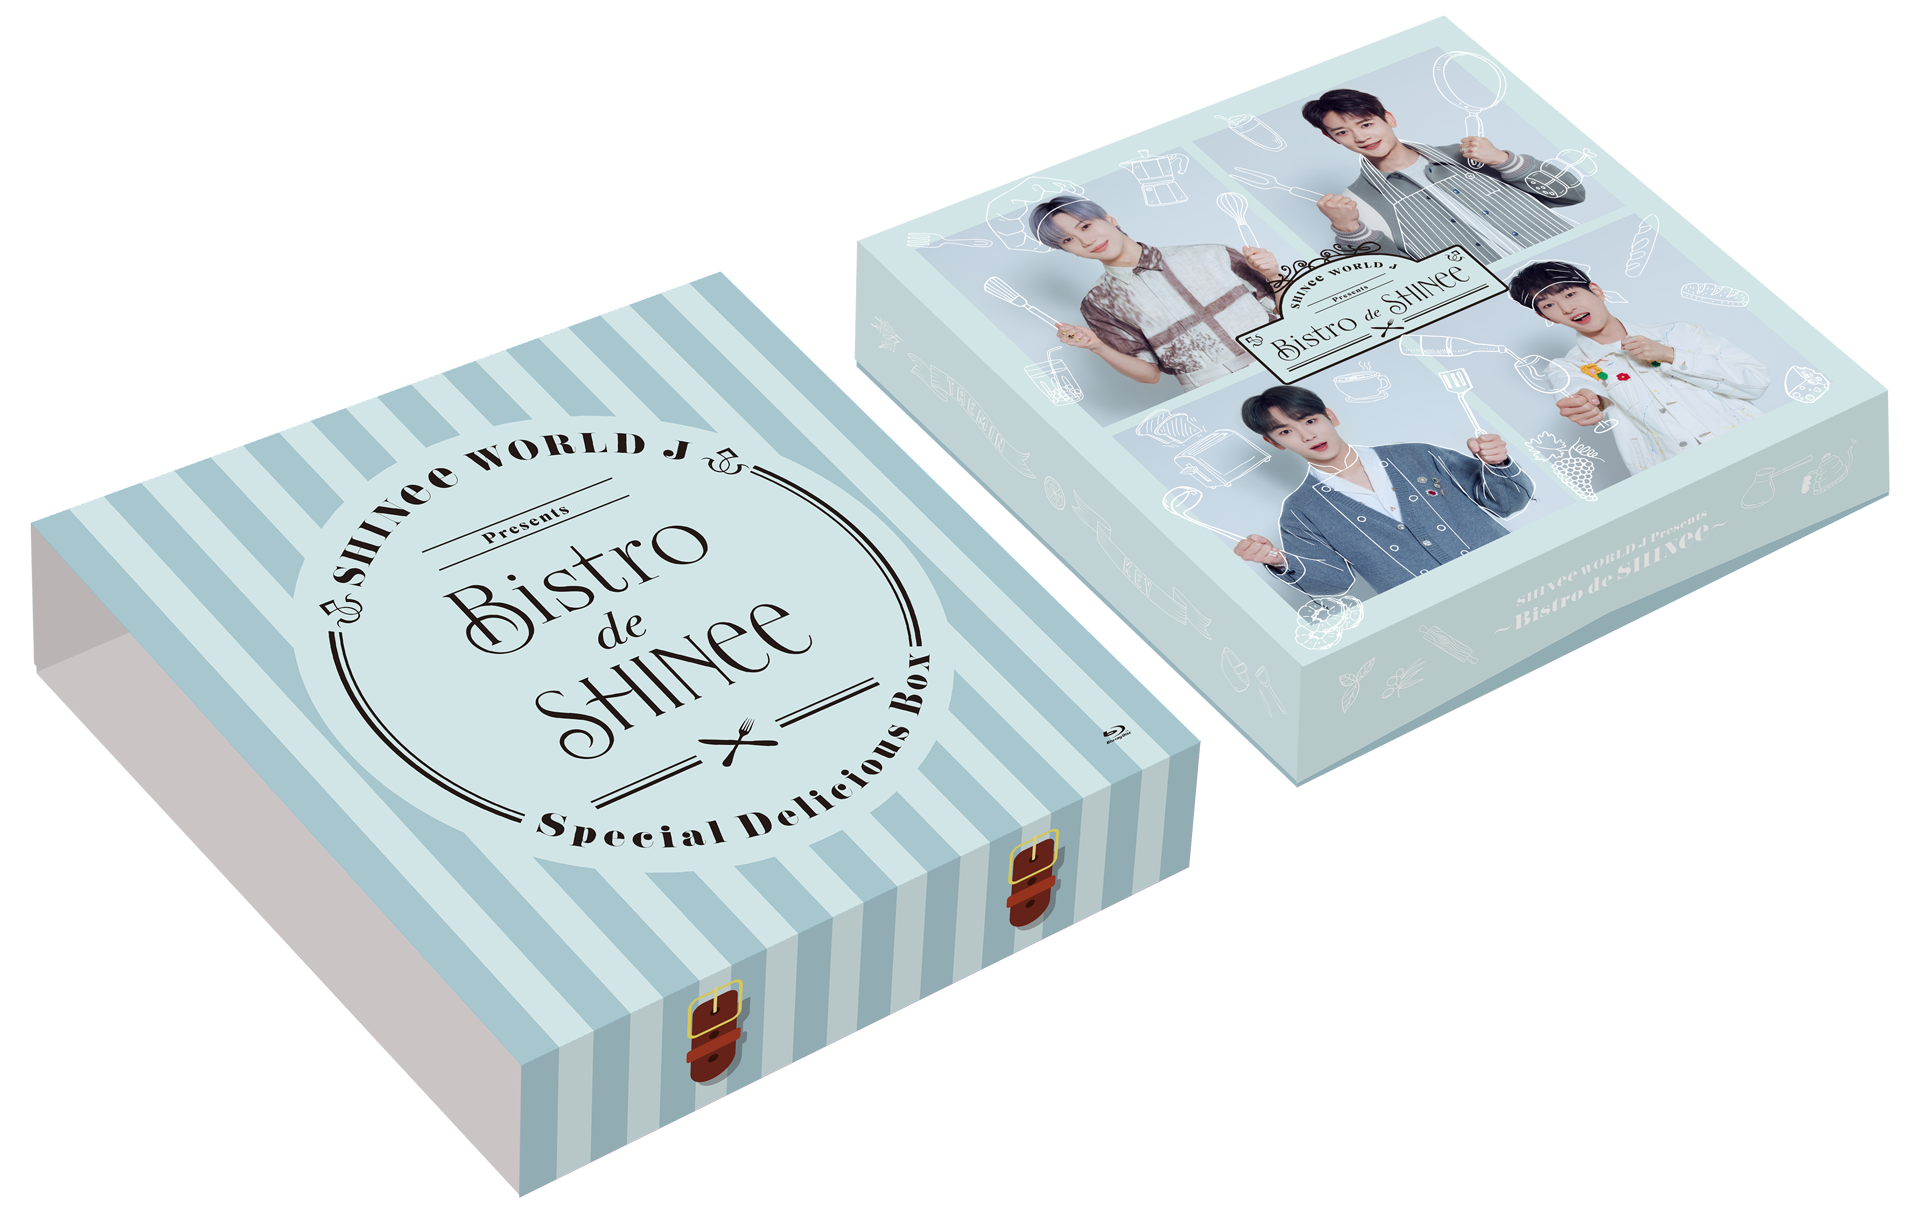 Blu Ray Dvd Shinee World J Presents Bistro De Shinee ジャケット写真公開 さらに全店舗共通特典も Shinee Official Website